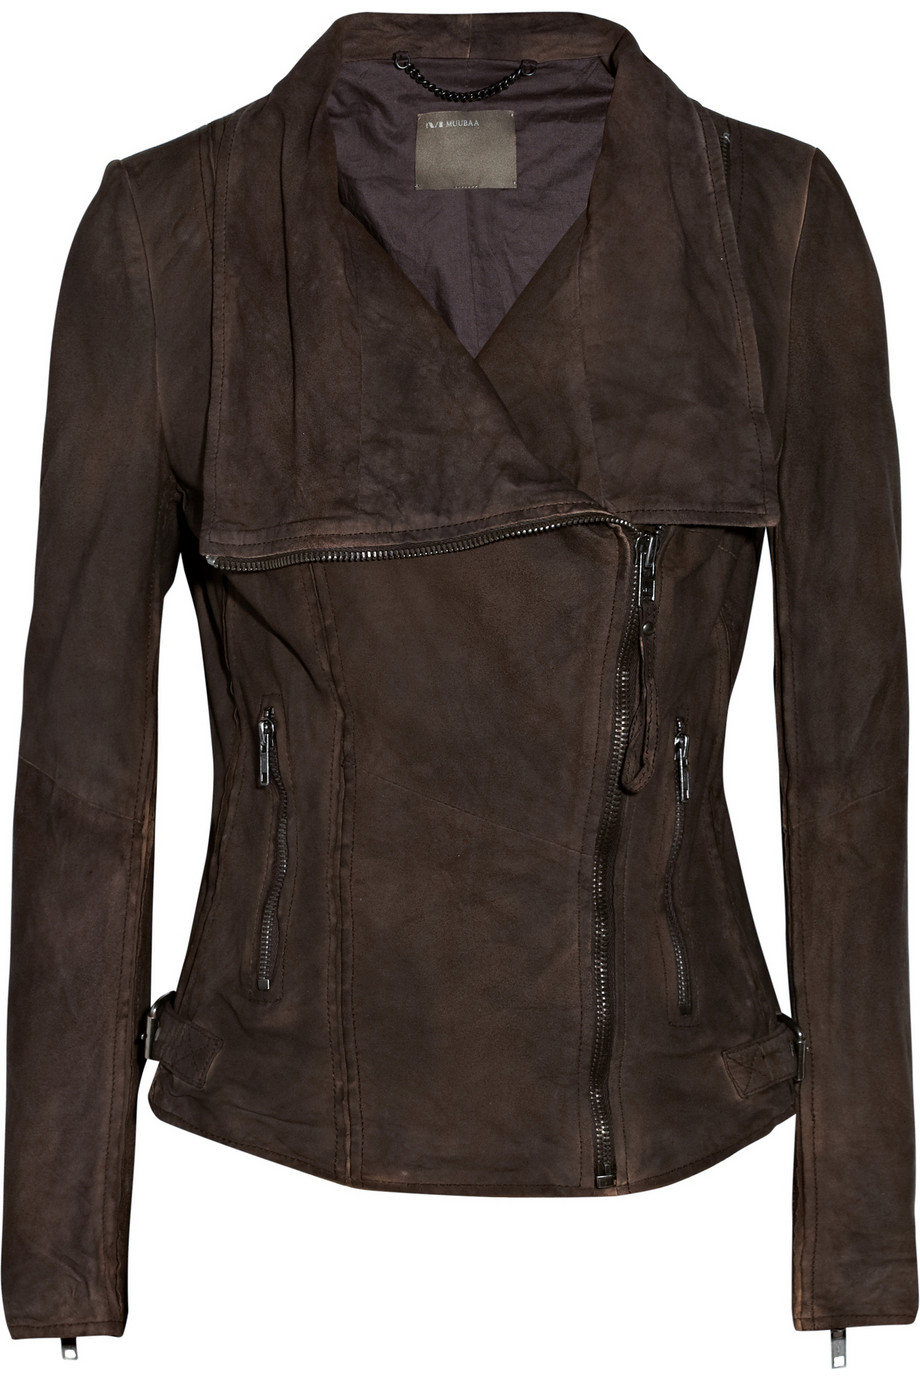 Muubaa Juana Leather Biker Jacket in Dark Brown (Brown) - Lyst